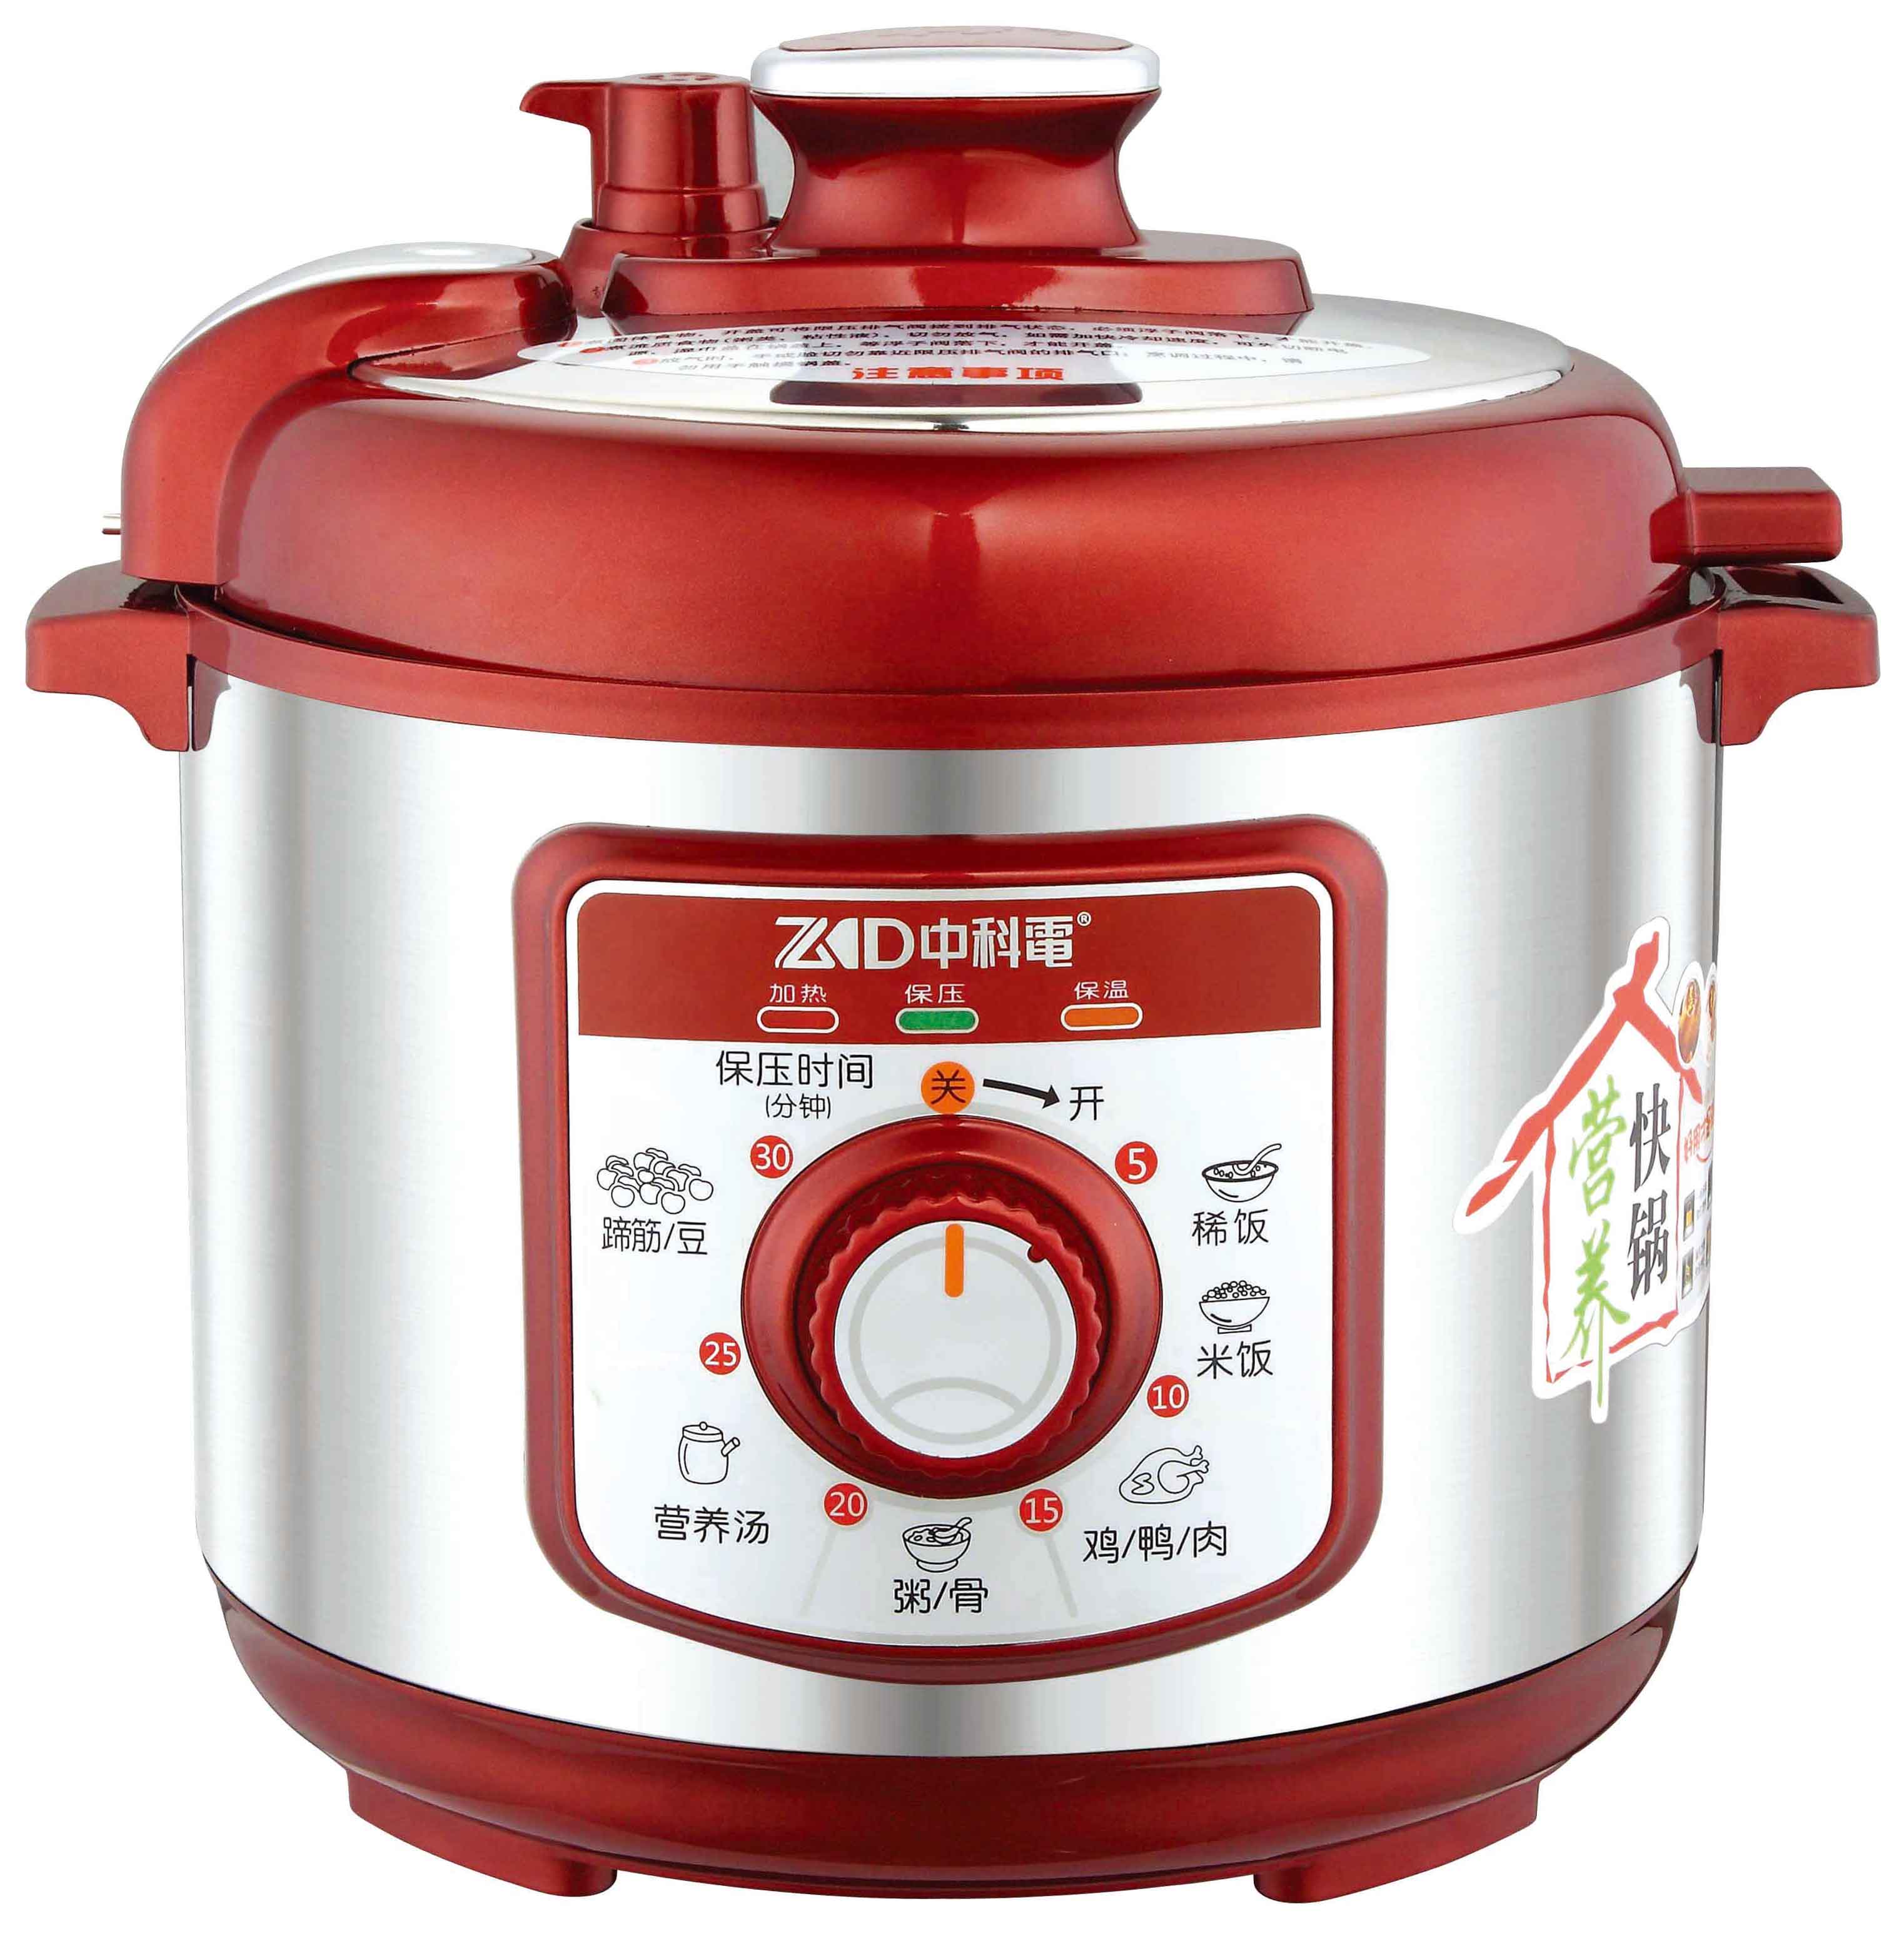 ZKD JIYUNSTARA (red)Mechanics Pressure Cooker 5L Capacity